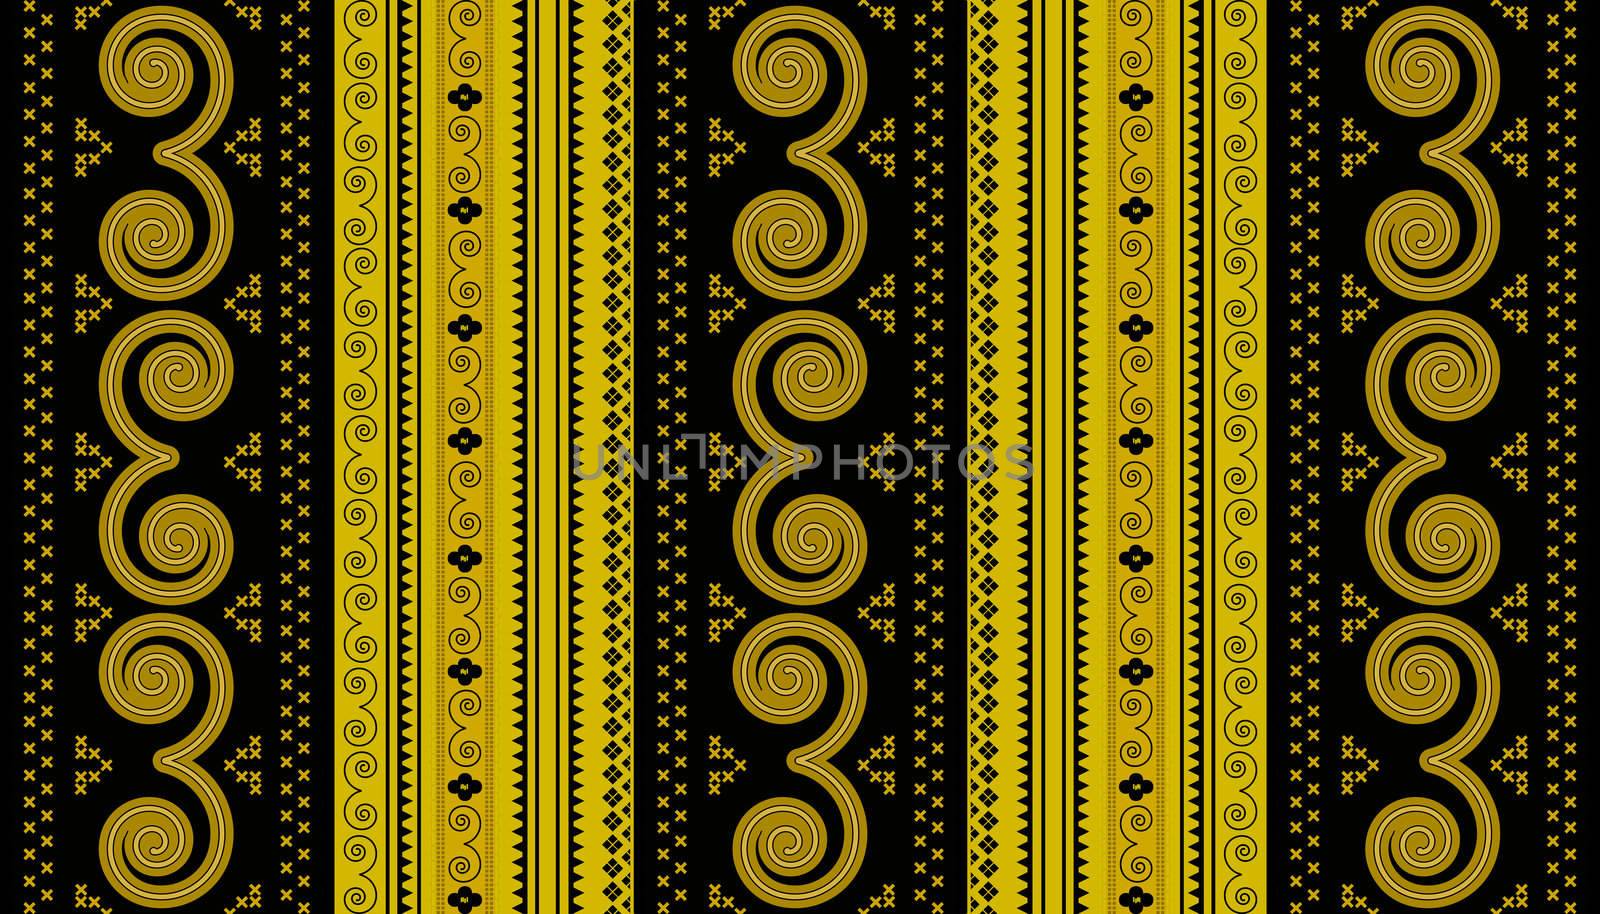 Etnic pattern by Lirch